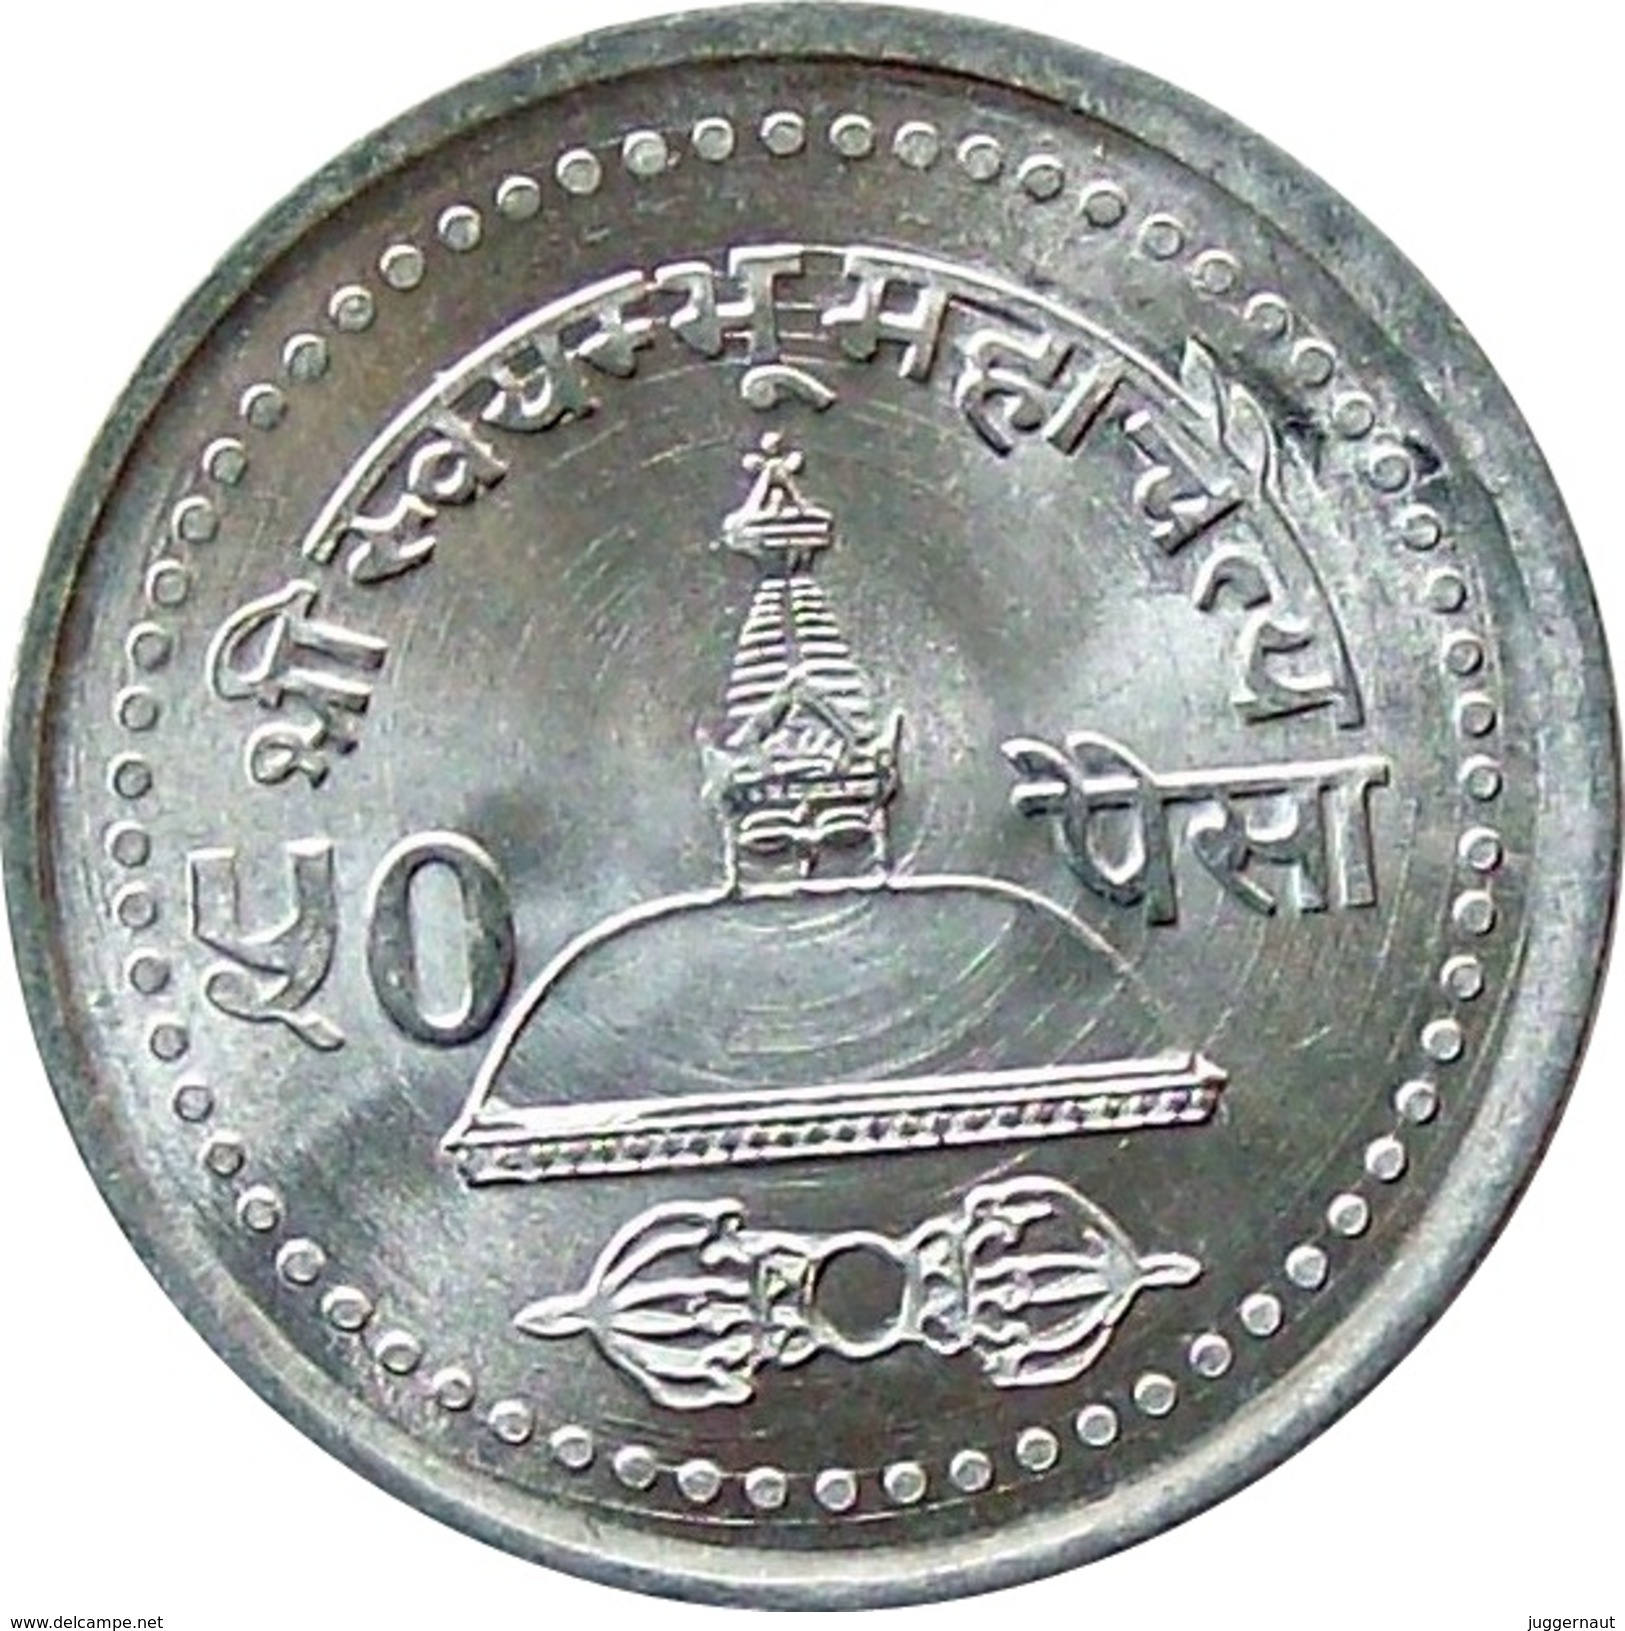 NEPAL 50 PAISA SWAYAMBHUNATH TEMPLE ALUMINUM COIN NEPAL 2004 KM-1179 UNCIRCULATED UNC - Népal